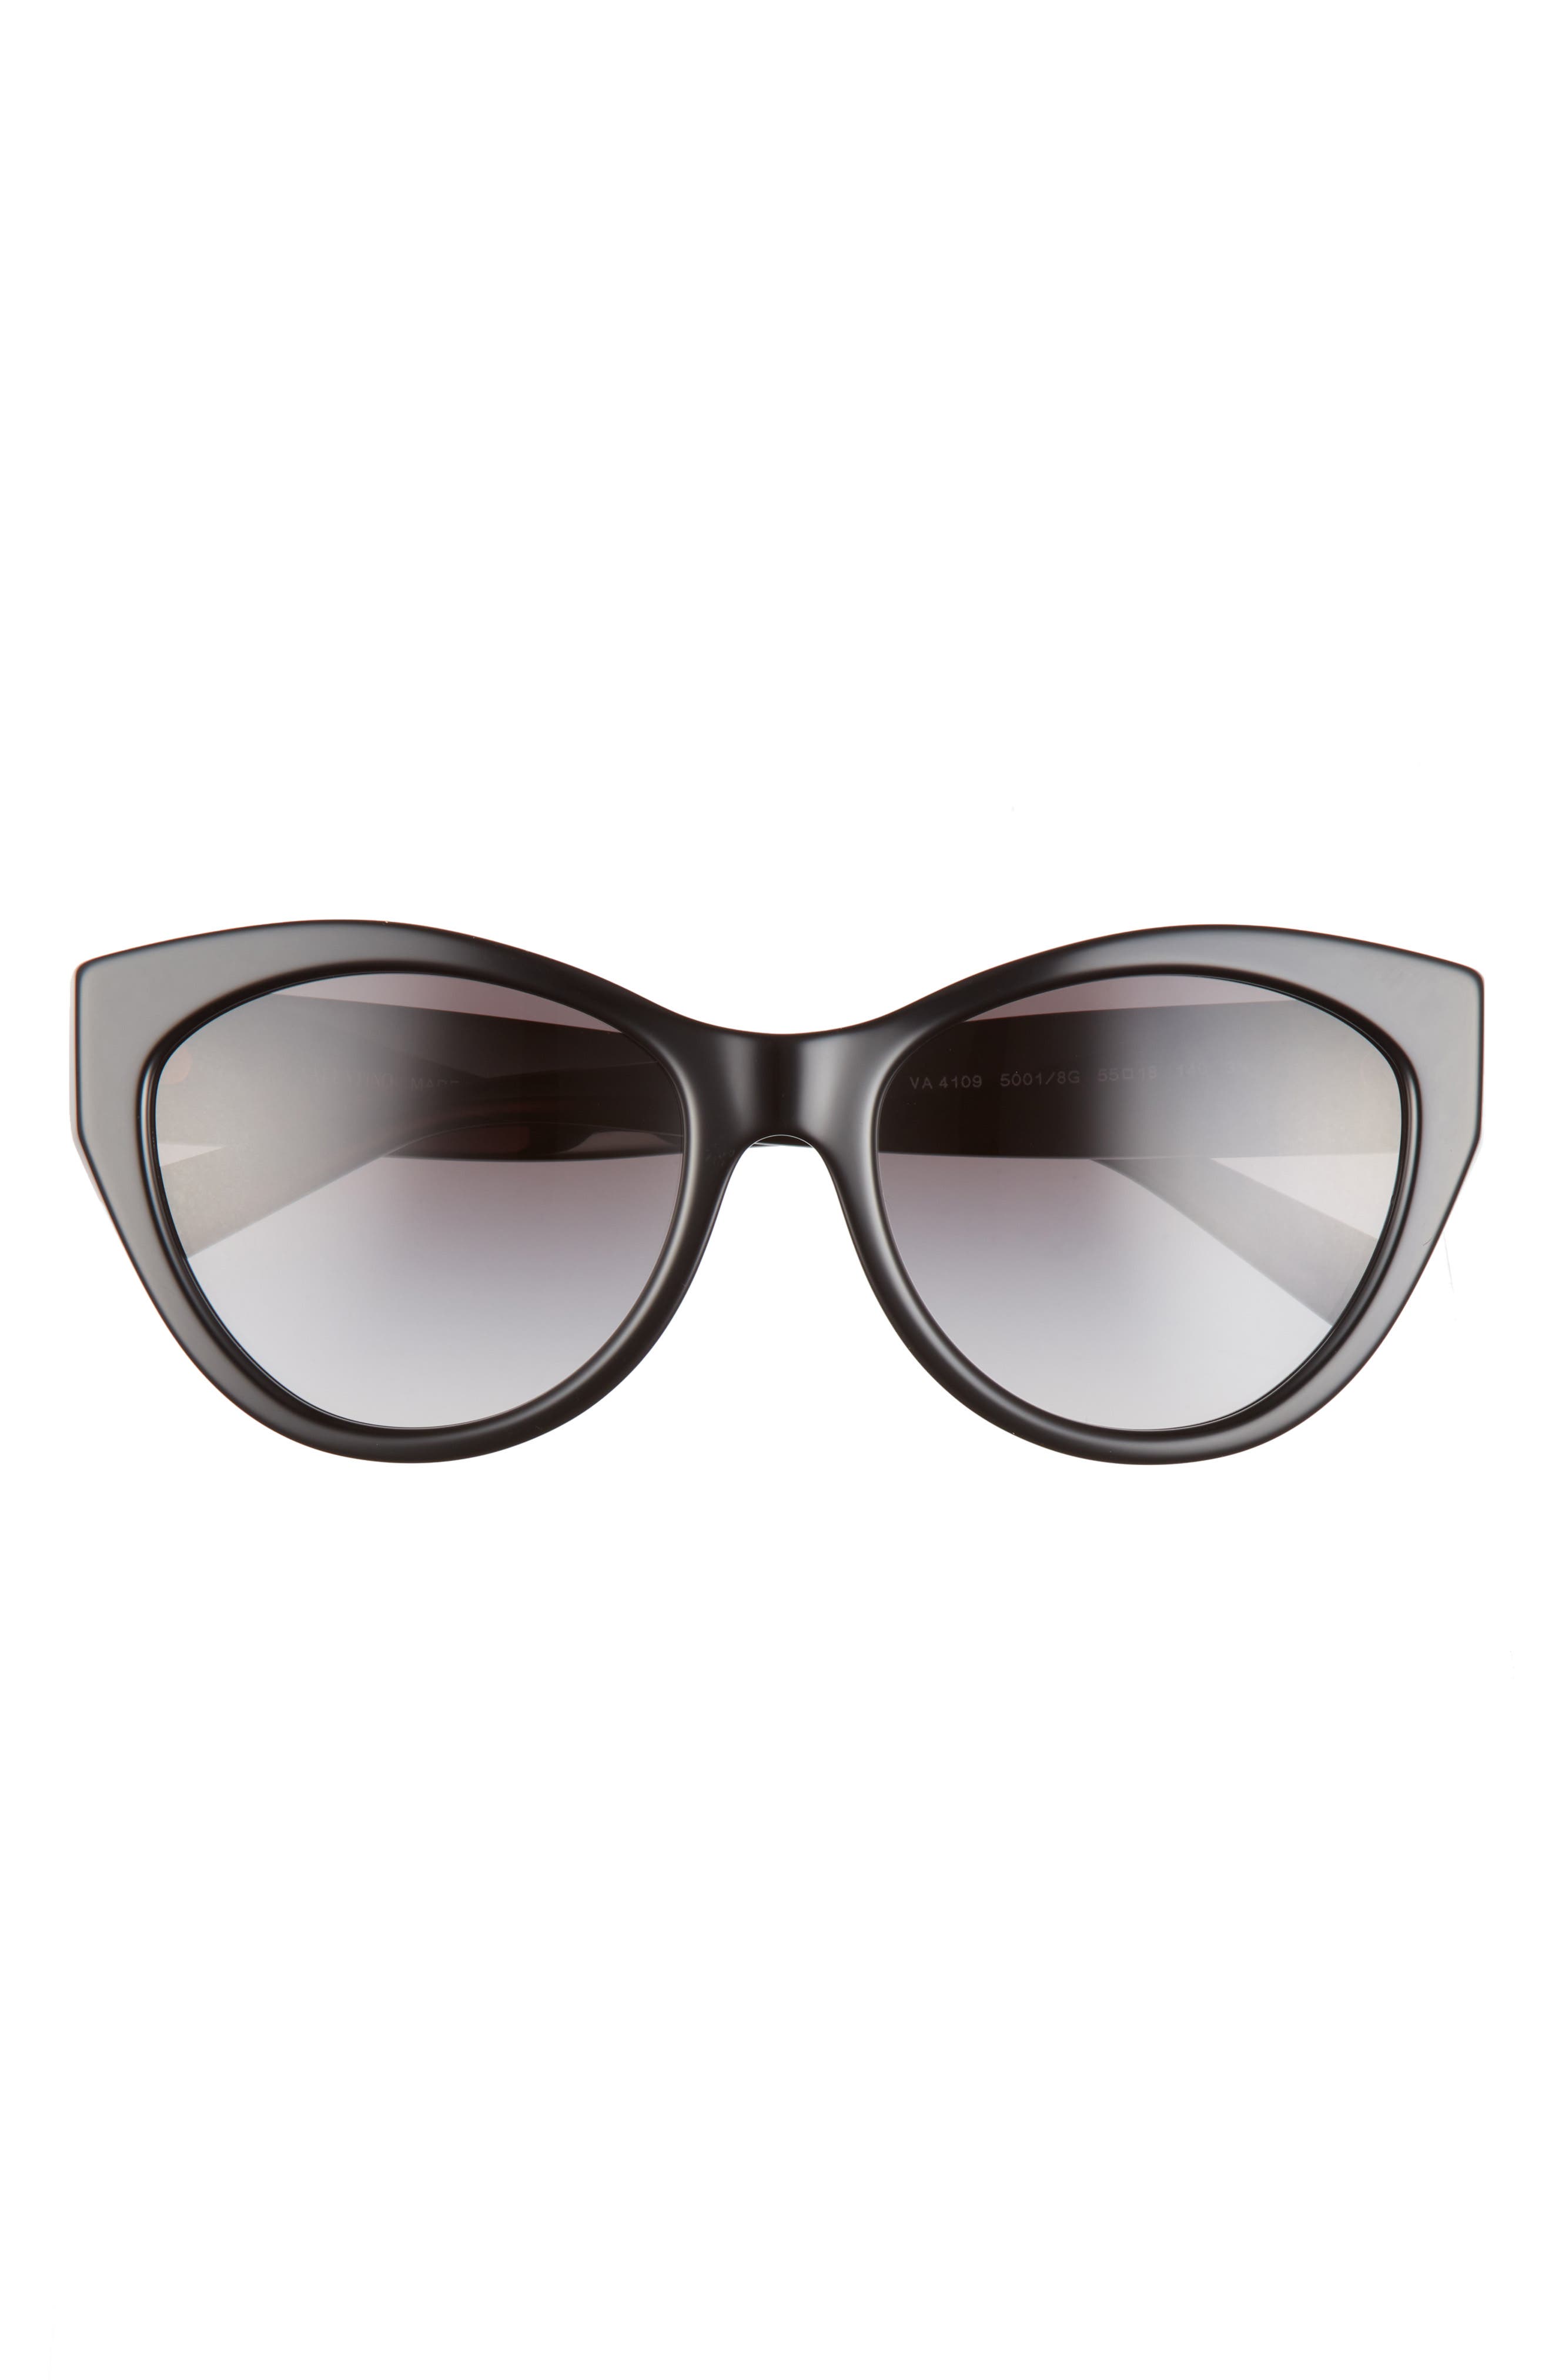 Valentino 55mm Gradient Round Sunglasses in Black/Grey Gradient